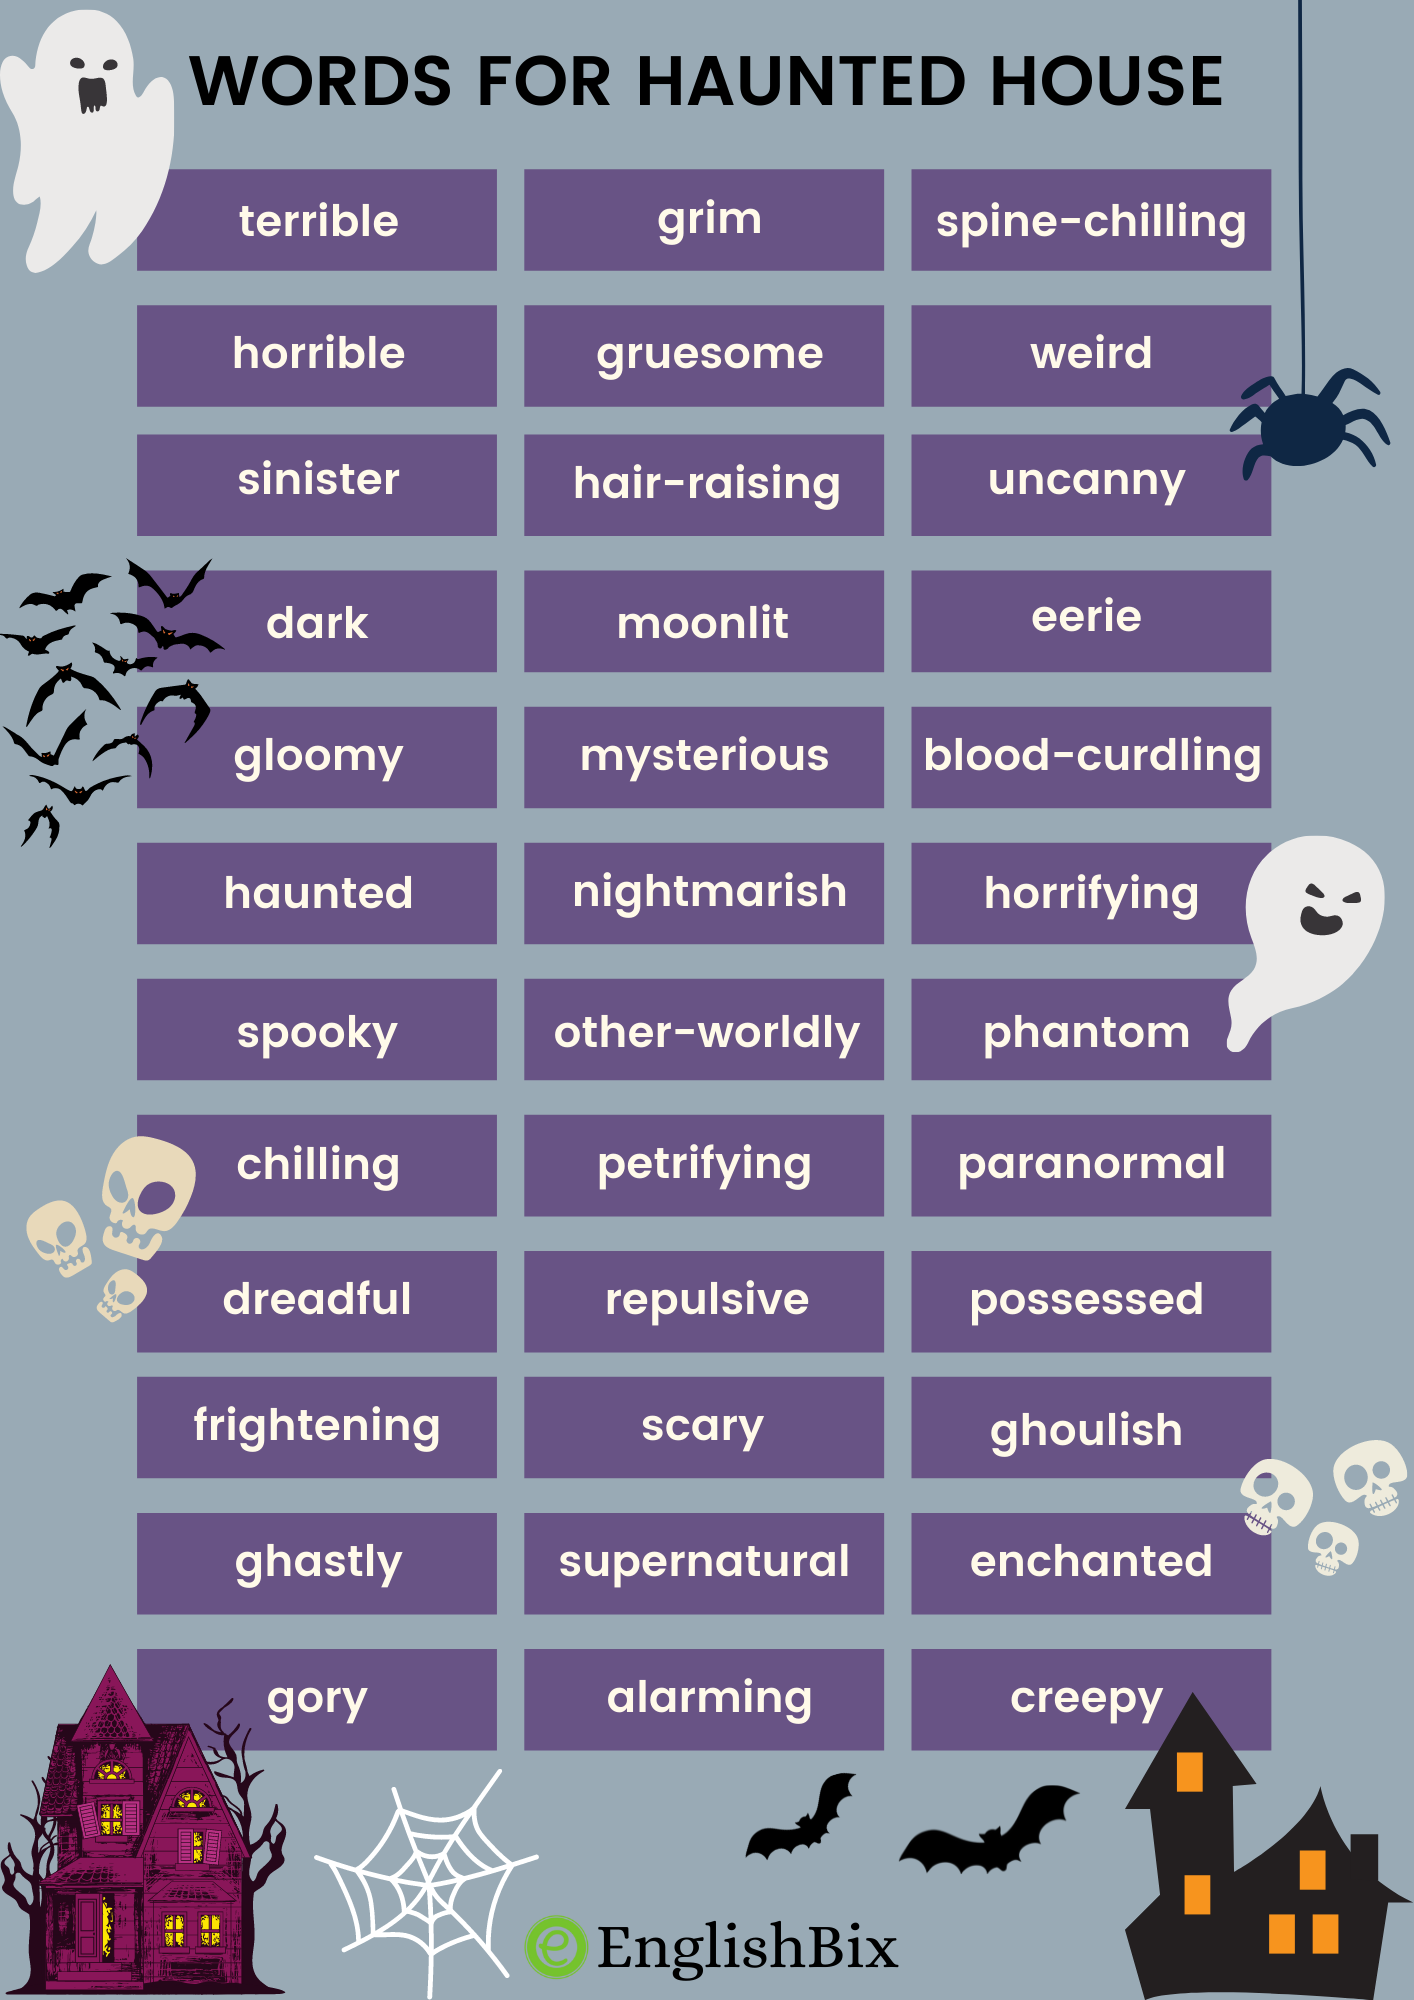 50 Adjective Words To Describe a Haunted House - EnglishBix